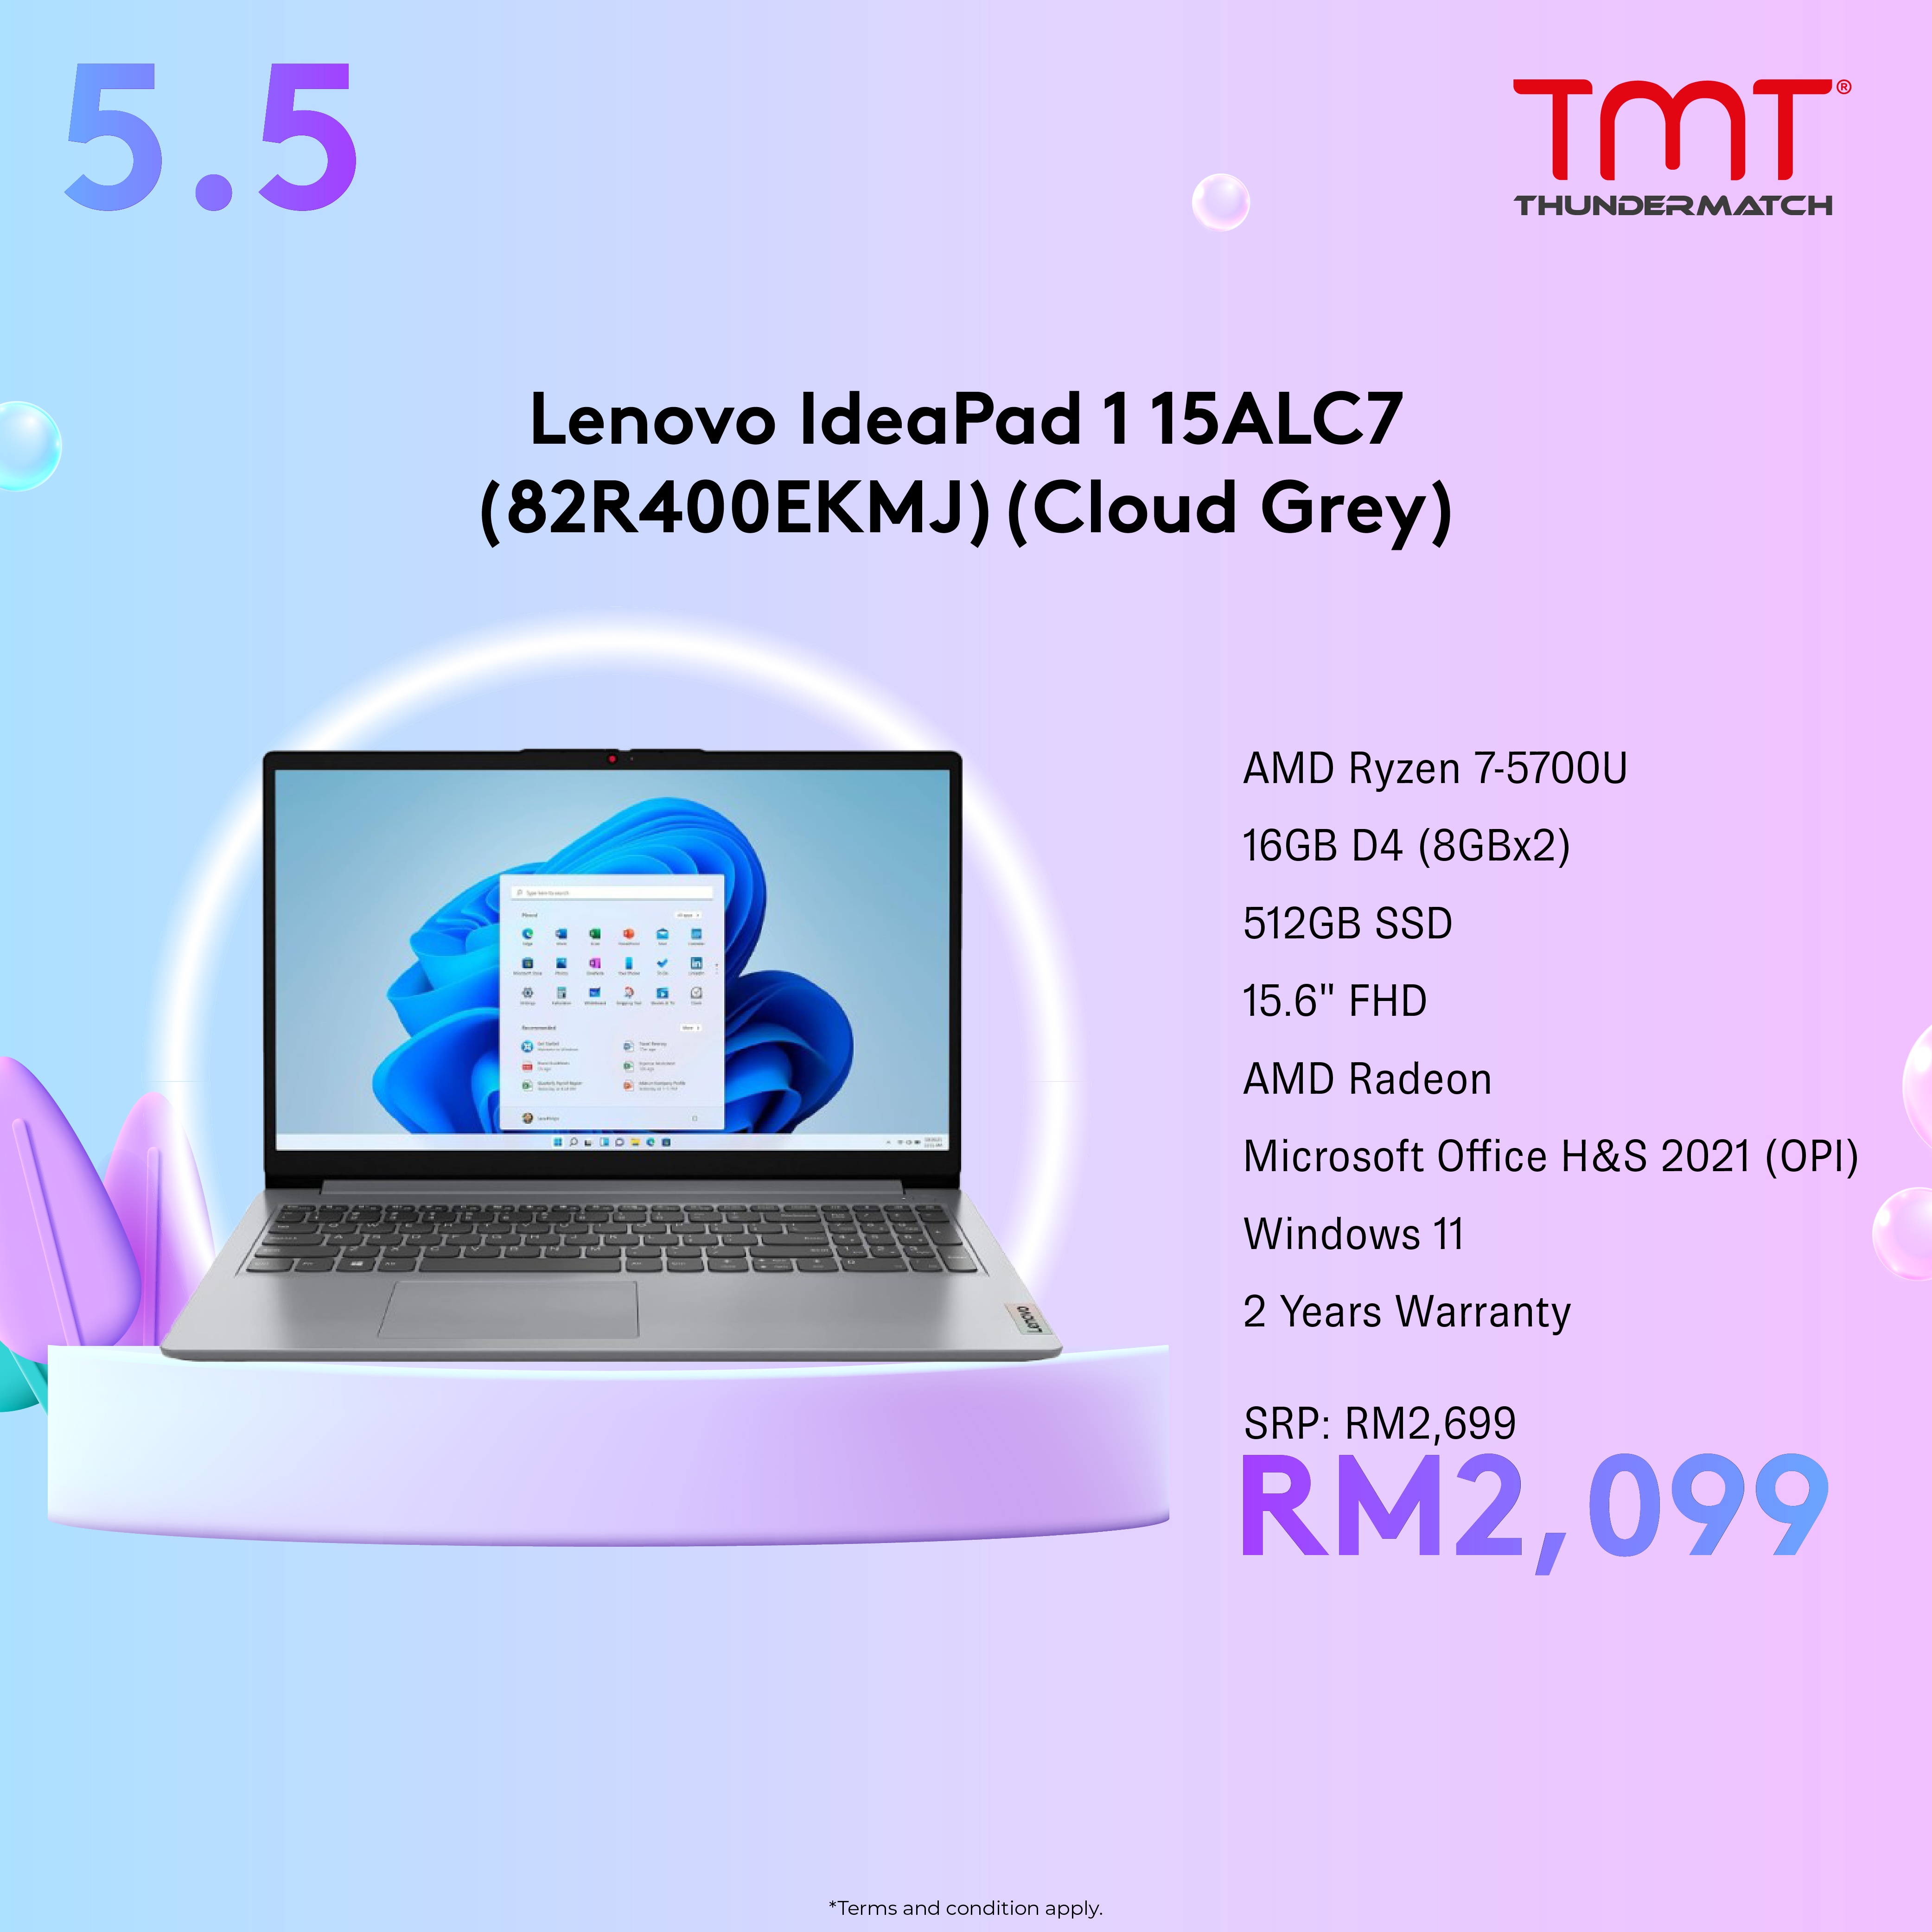 Lenovo IdeaPad 1 15ALC7 Laptop (82R400EKMJ) | AMD Ryzen 7-5700U | 16GB RAM 512GB SSD | 15.6" FHD(1920x1080) | AMD Radeon | MS Office H&S 2021 | Wind11 | 2Y Warranty